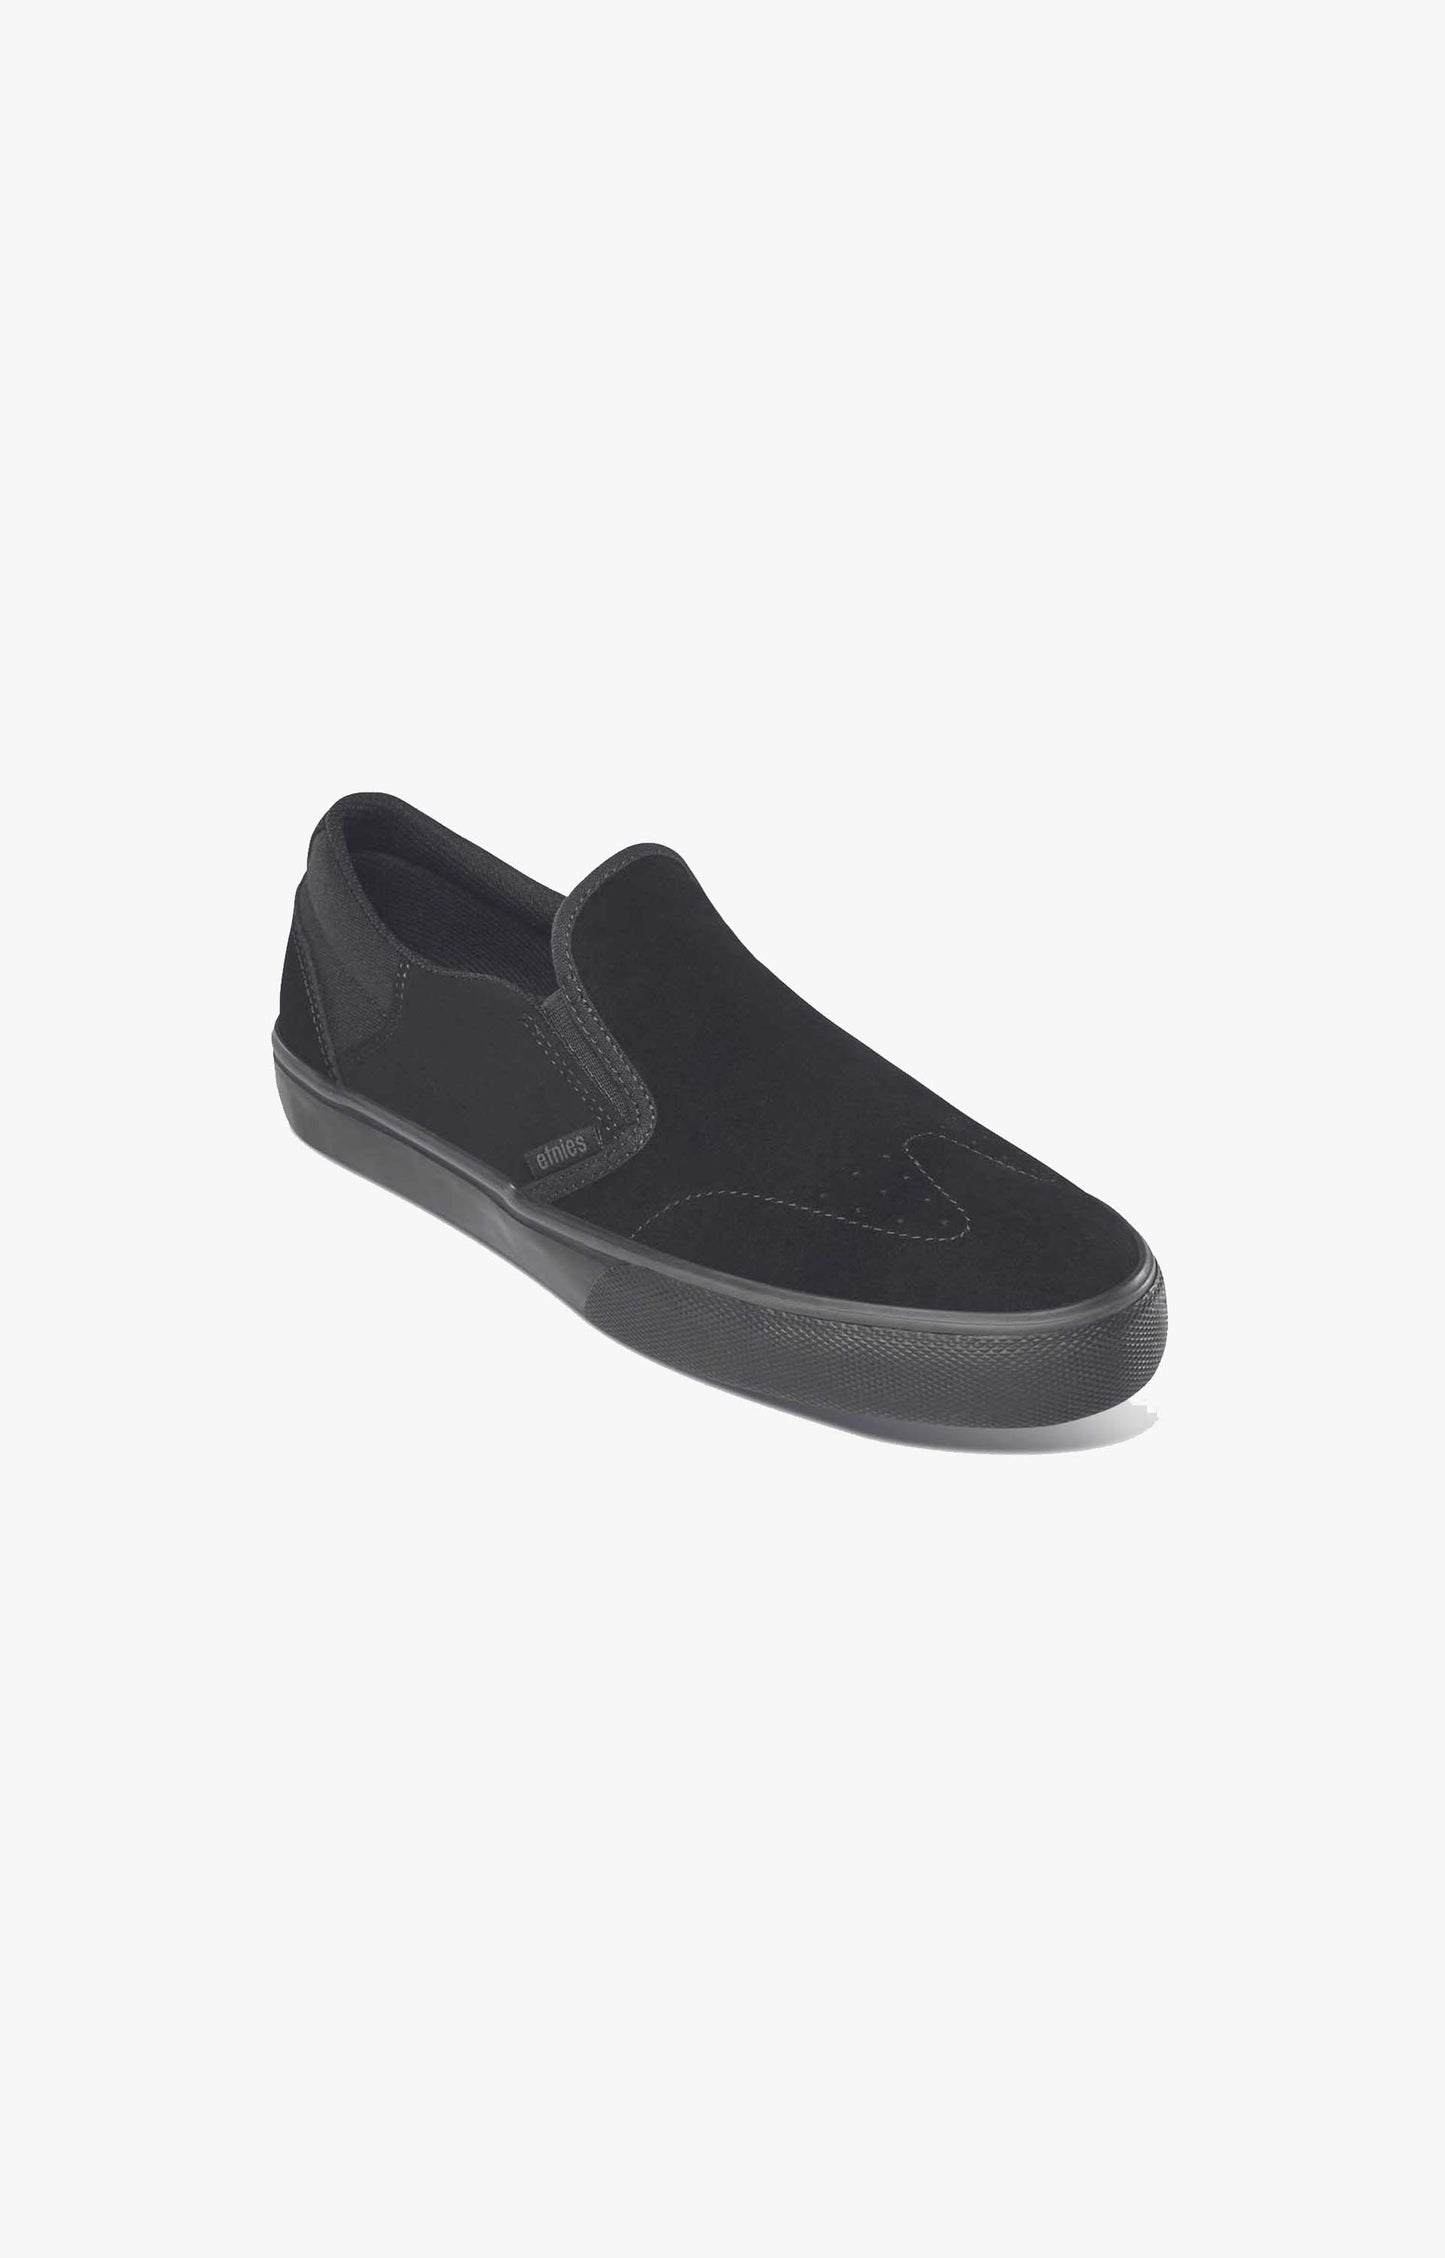 Etnies Marana Youth Slip On Shoe, Black/Black